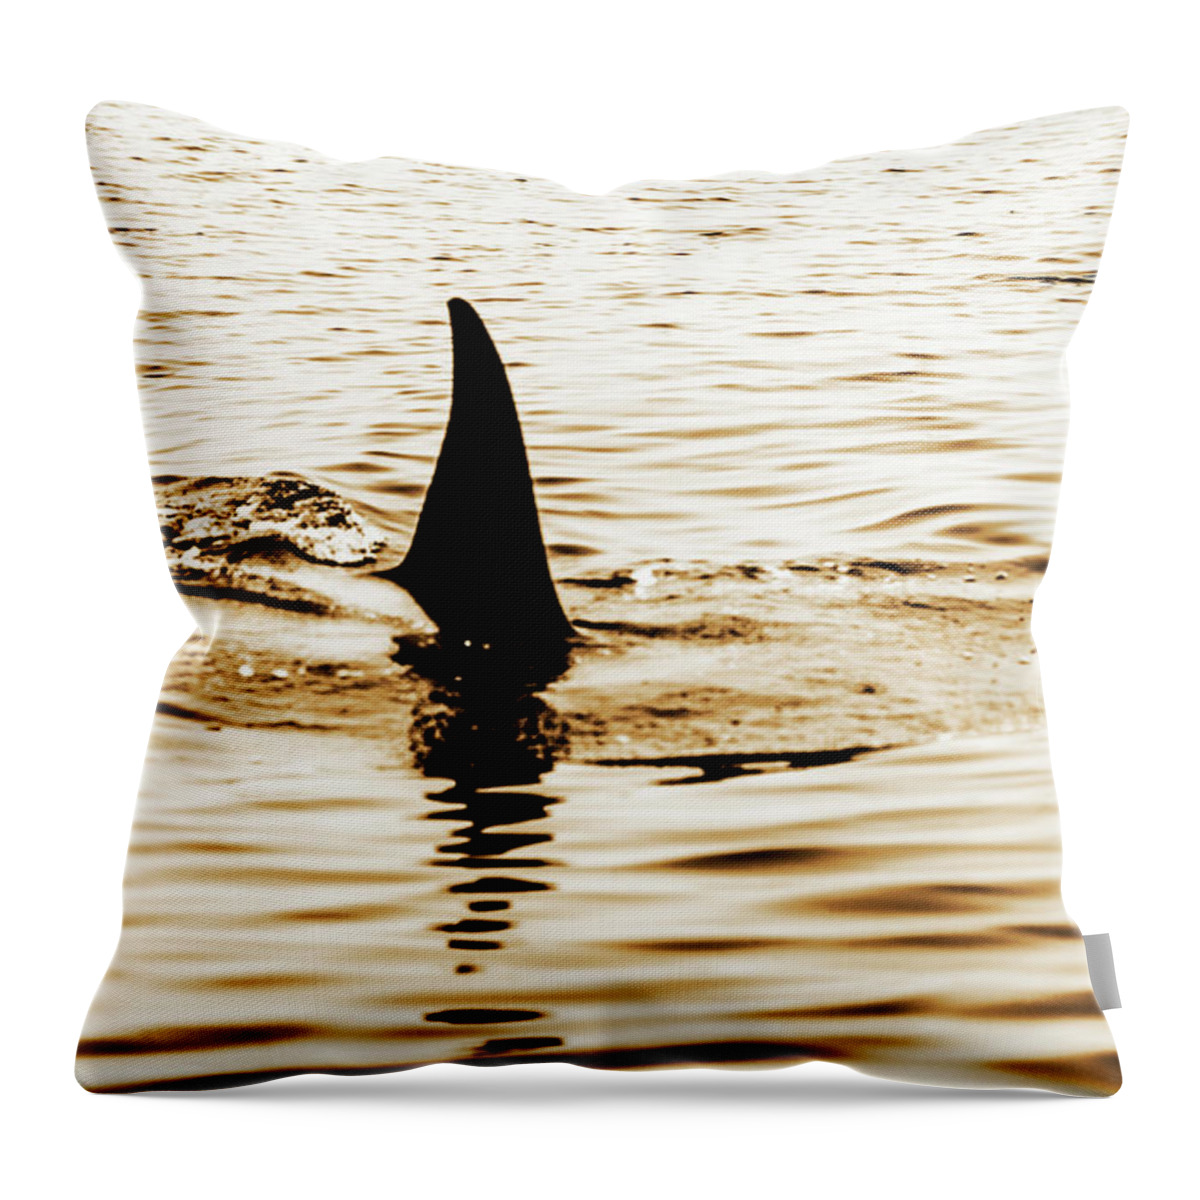 Alaska Throw Pillow featuring the photograph The Fin Of A Killer Whale by Ron Koeberer